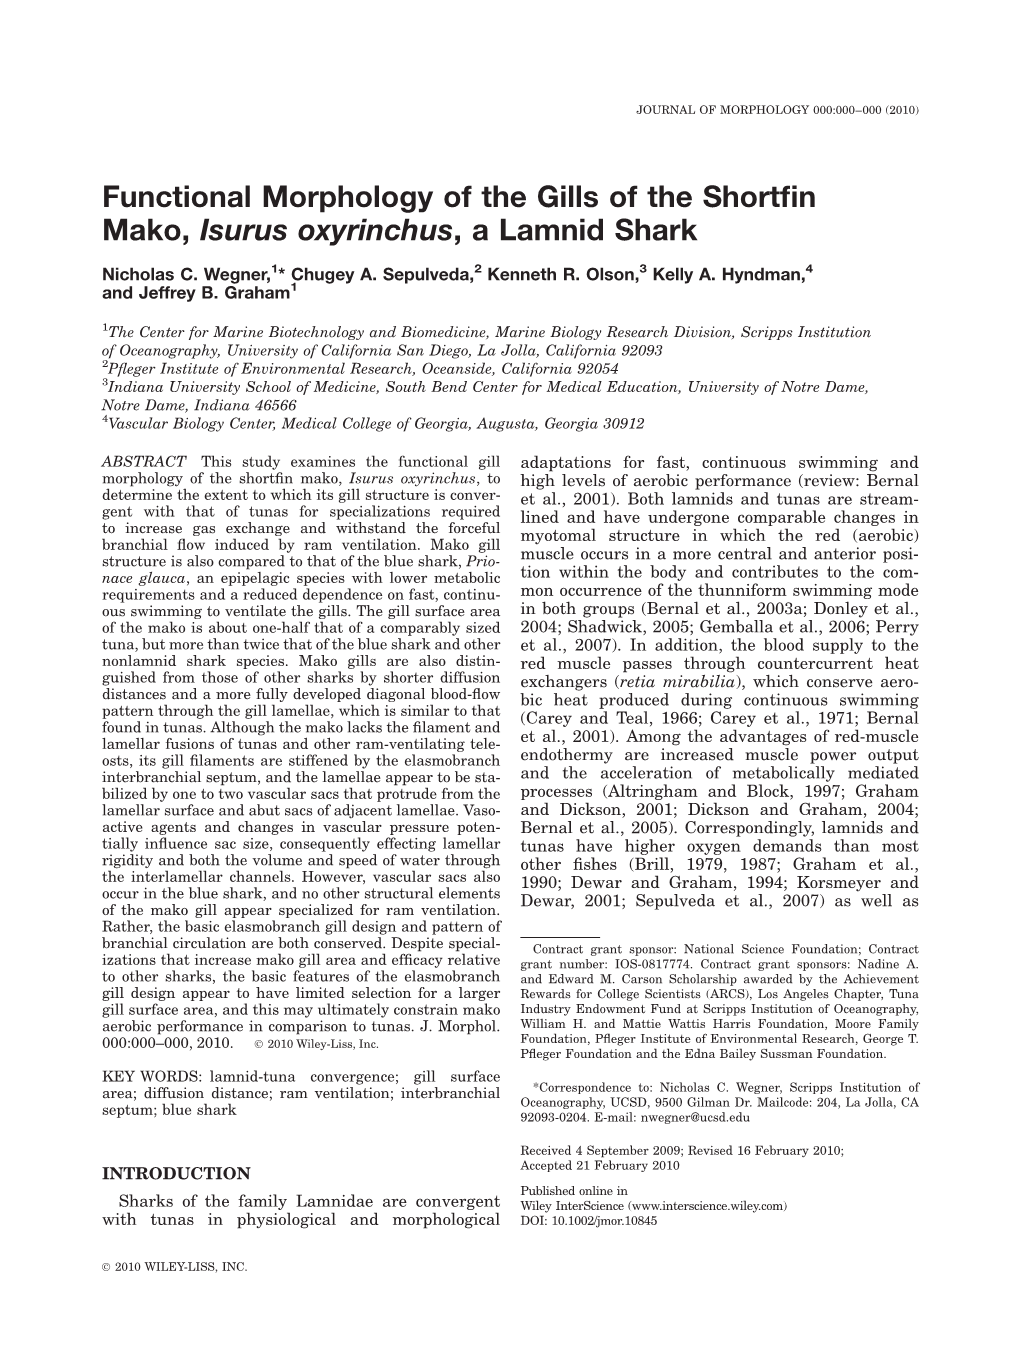 Functional Morphology of the Gills of the Shortfin Mako, Isurus Oxyrinchus, a Lamnid Shark